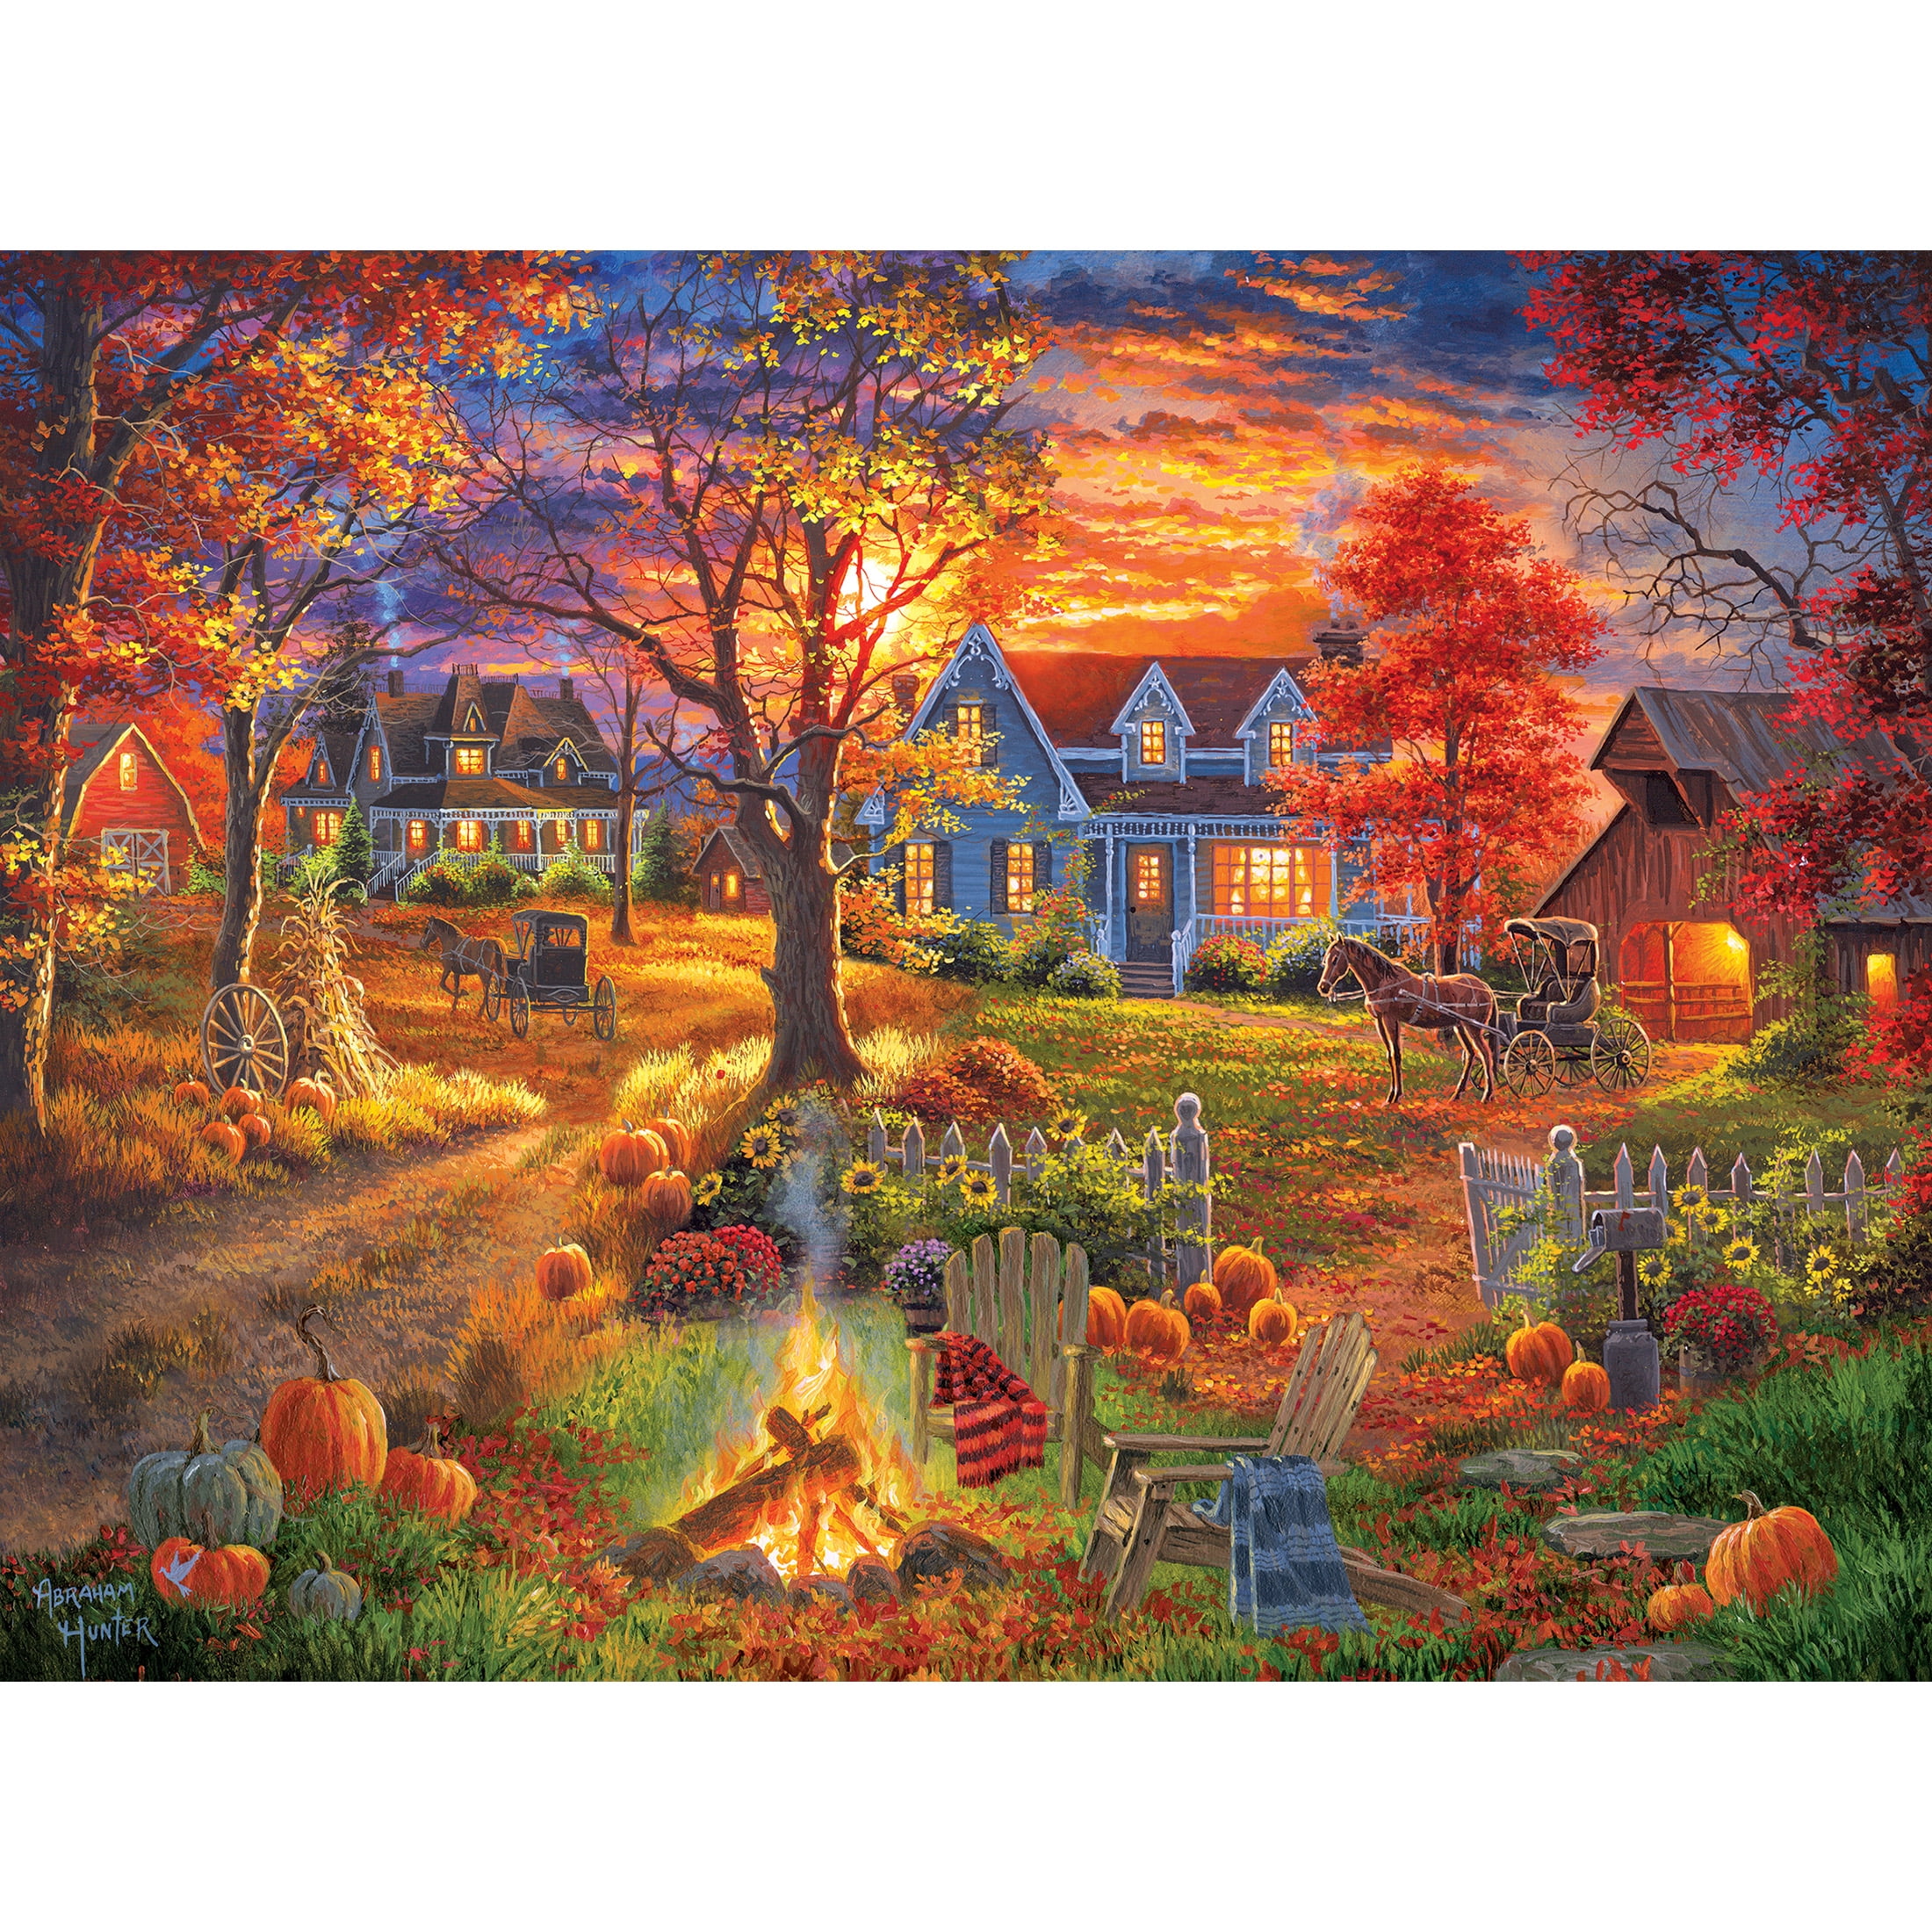 Cra-Z-Art Abraham Hunter 500-Piece Autumn Village Adult Jigsaw Puzzle